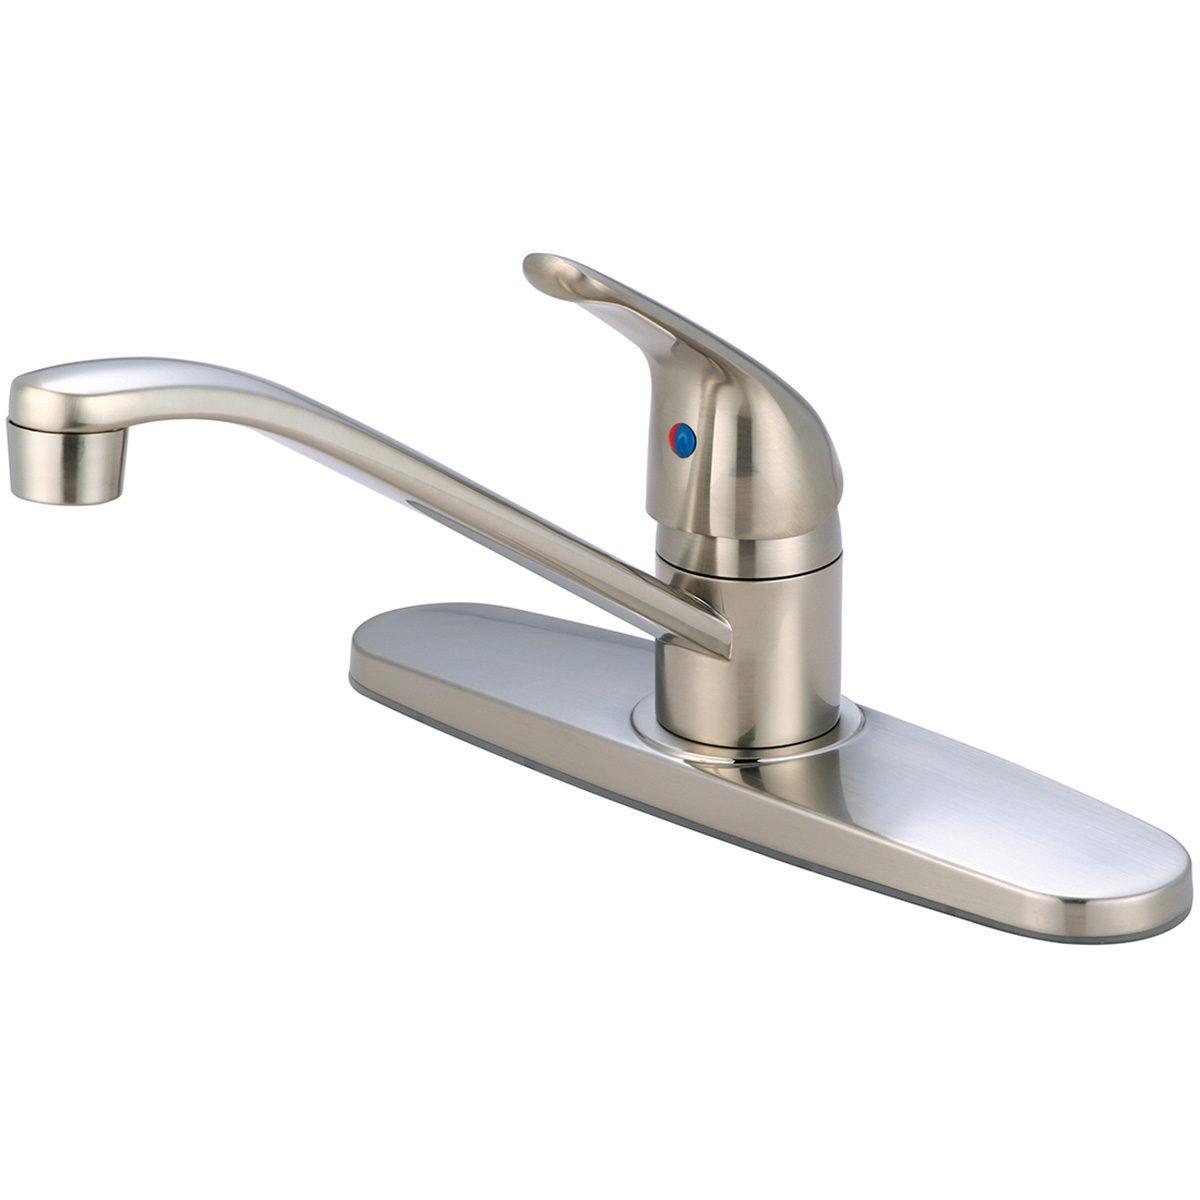 K-4160-bn Single Handle Kitchen Faucet - Brushed Nickel